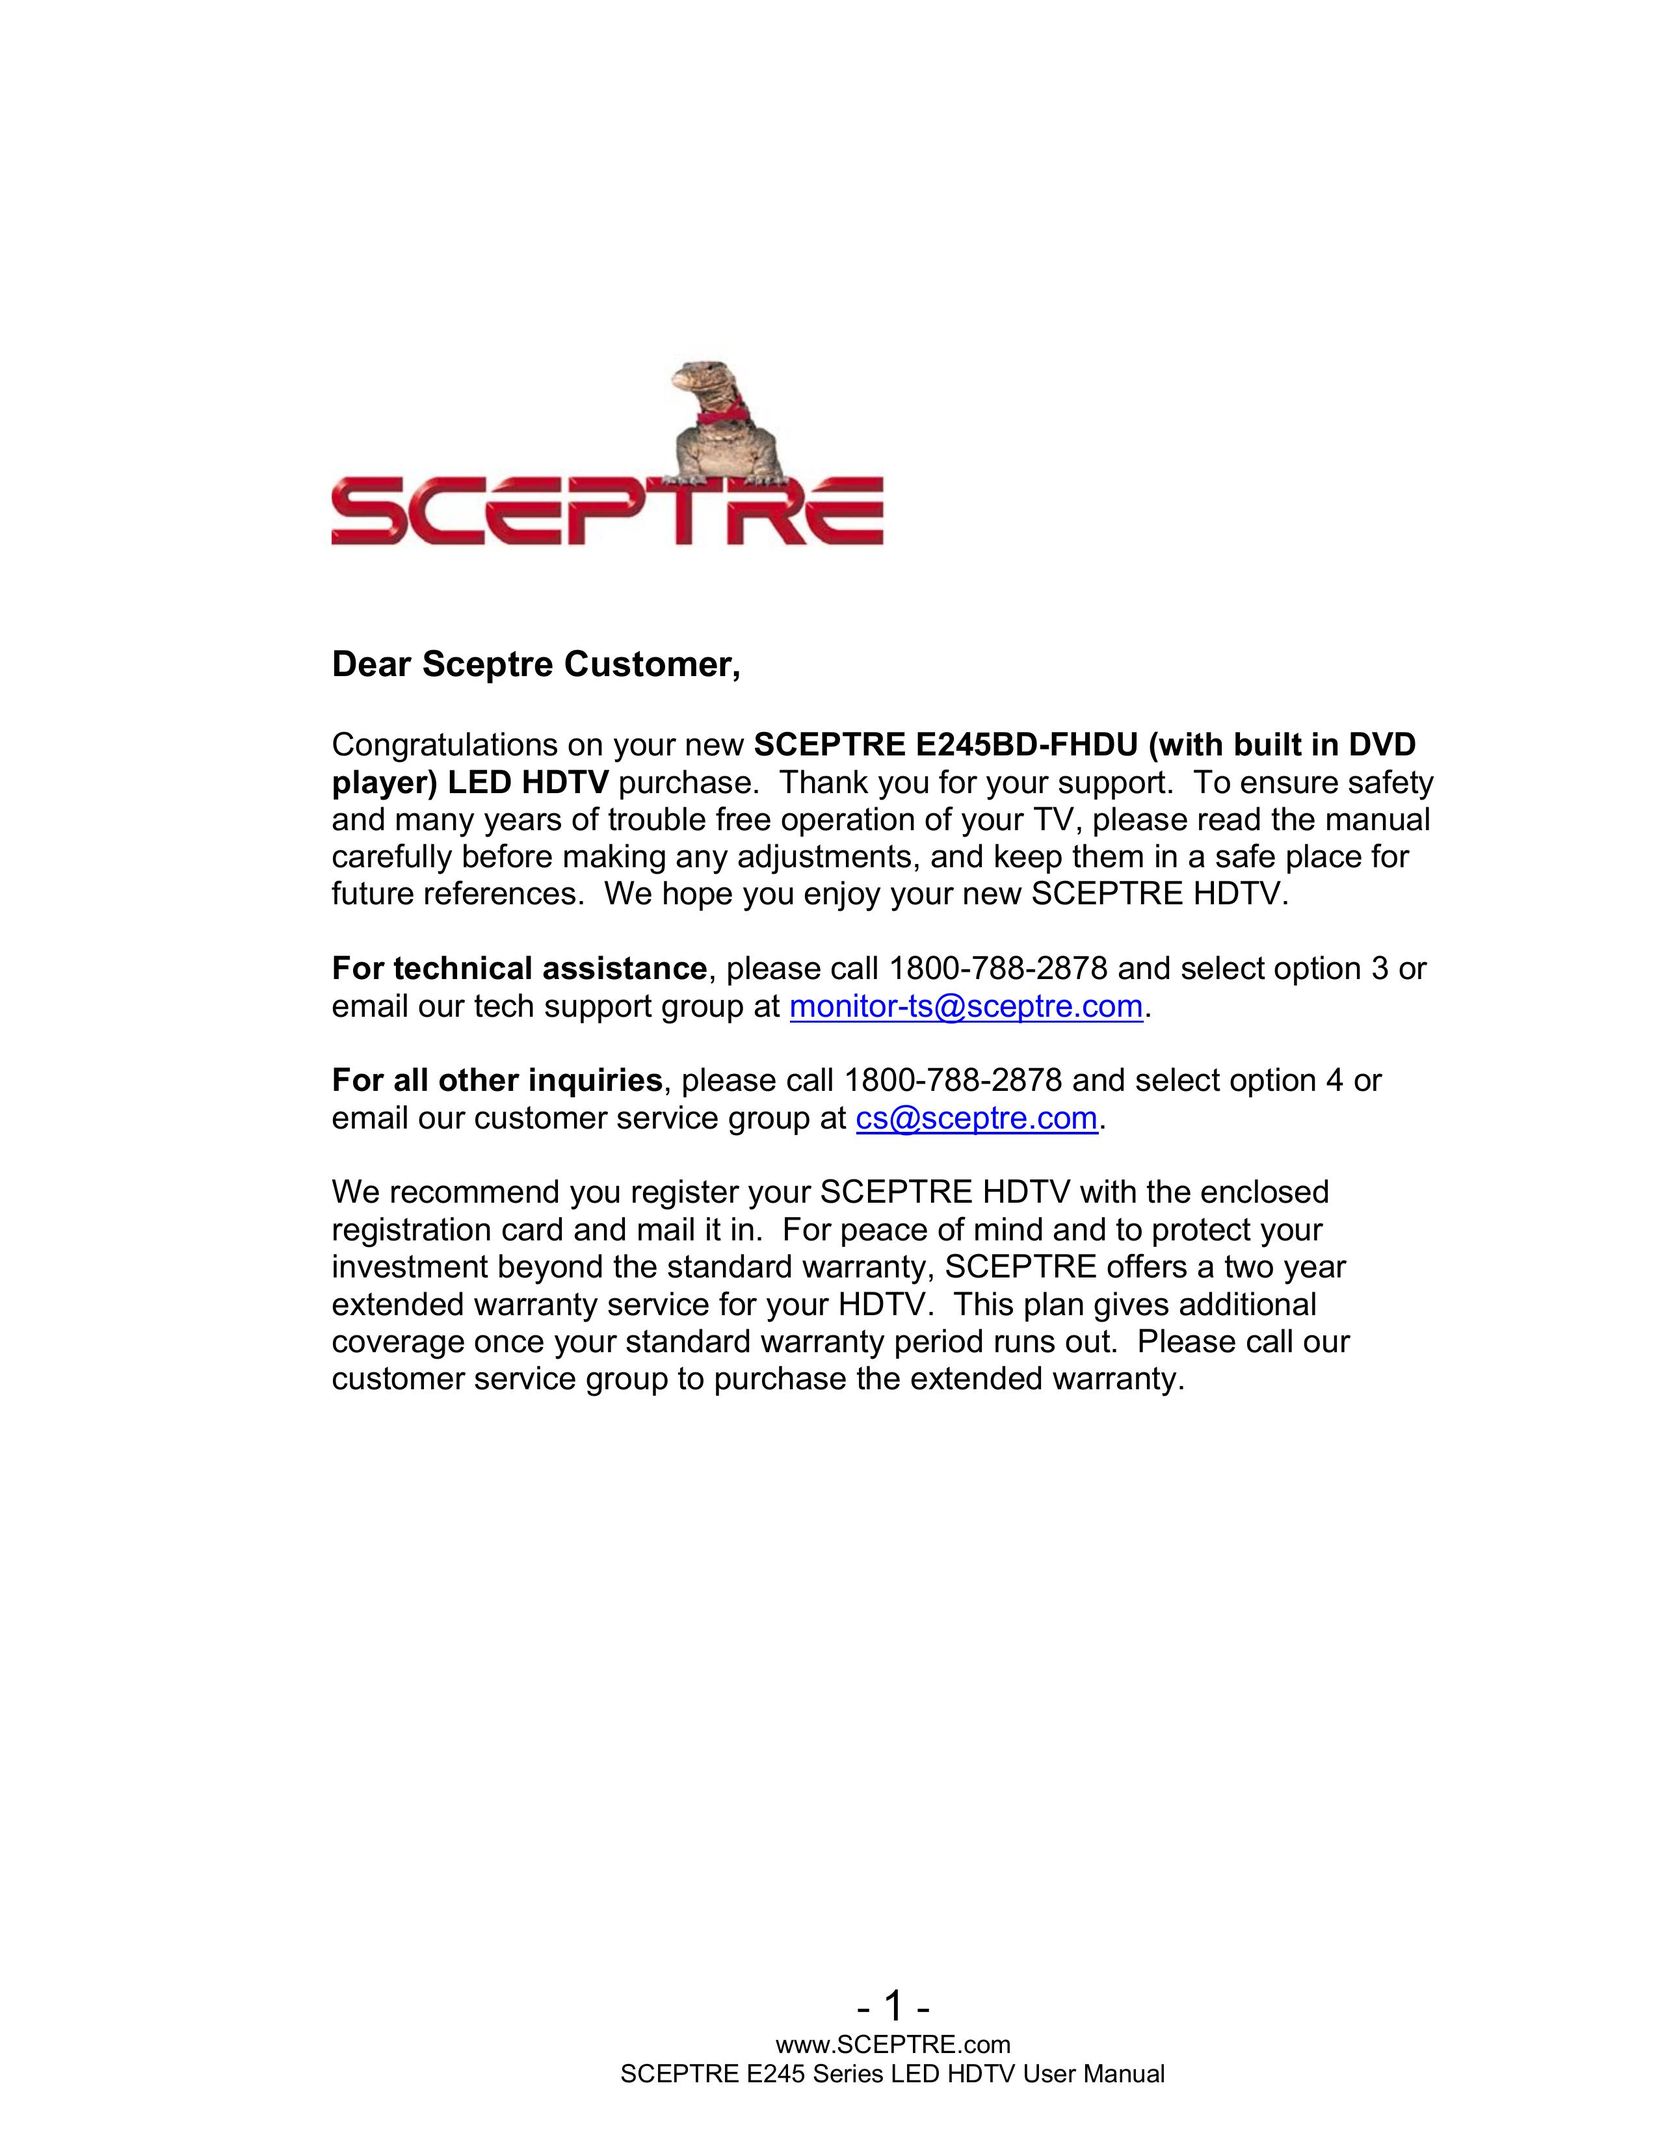 Sceptre Technologies E245BD-FHDU Flat Panel Television User Manual